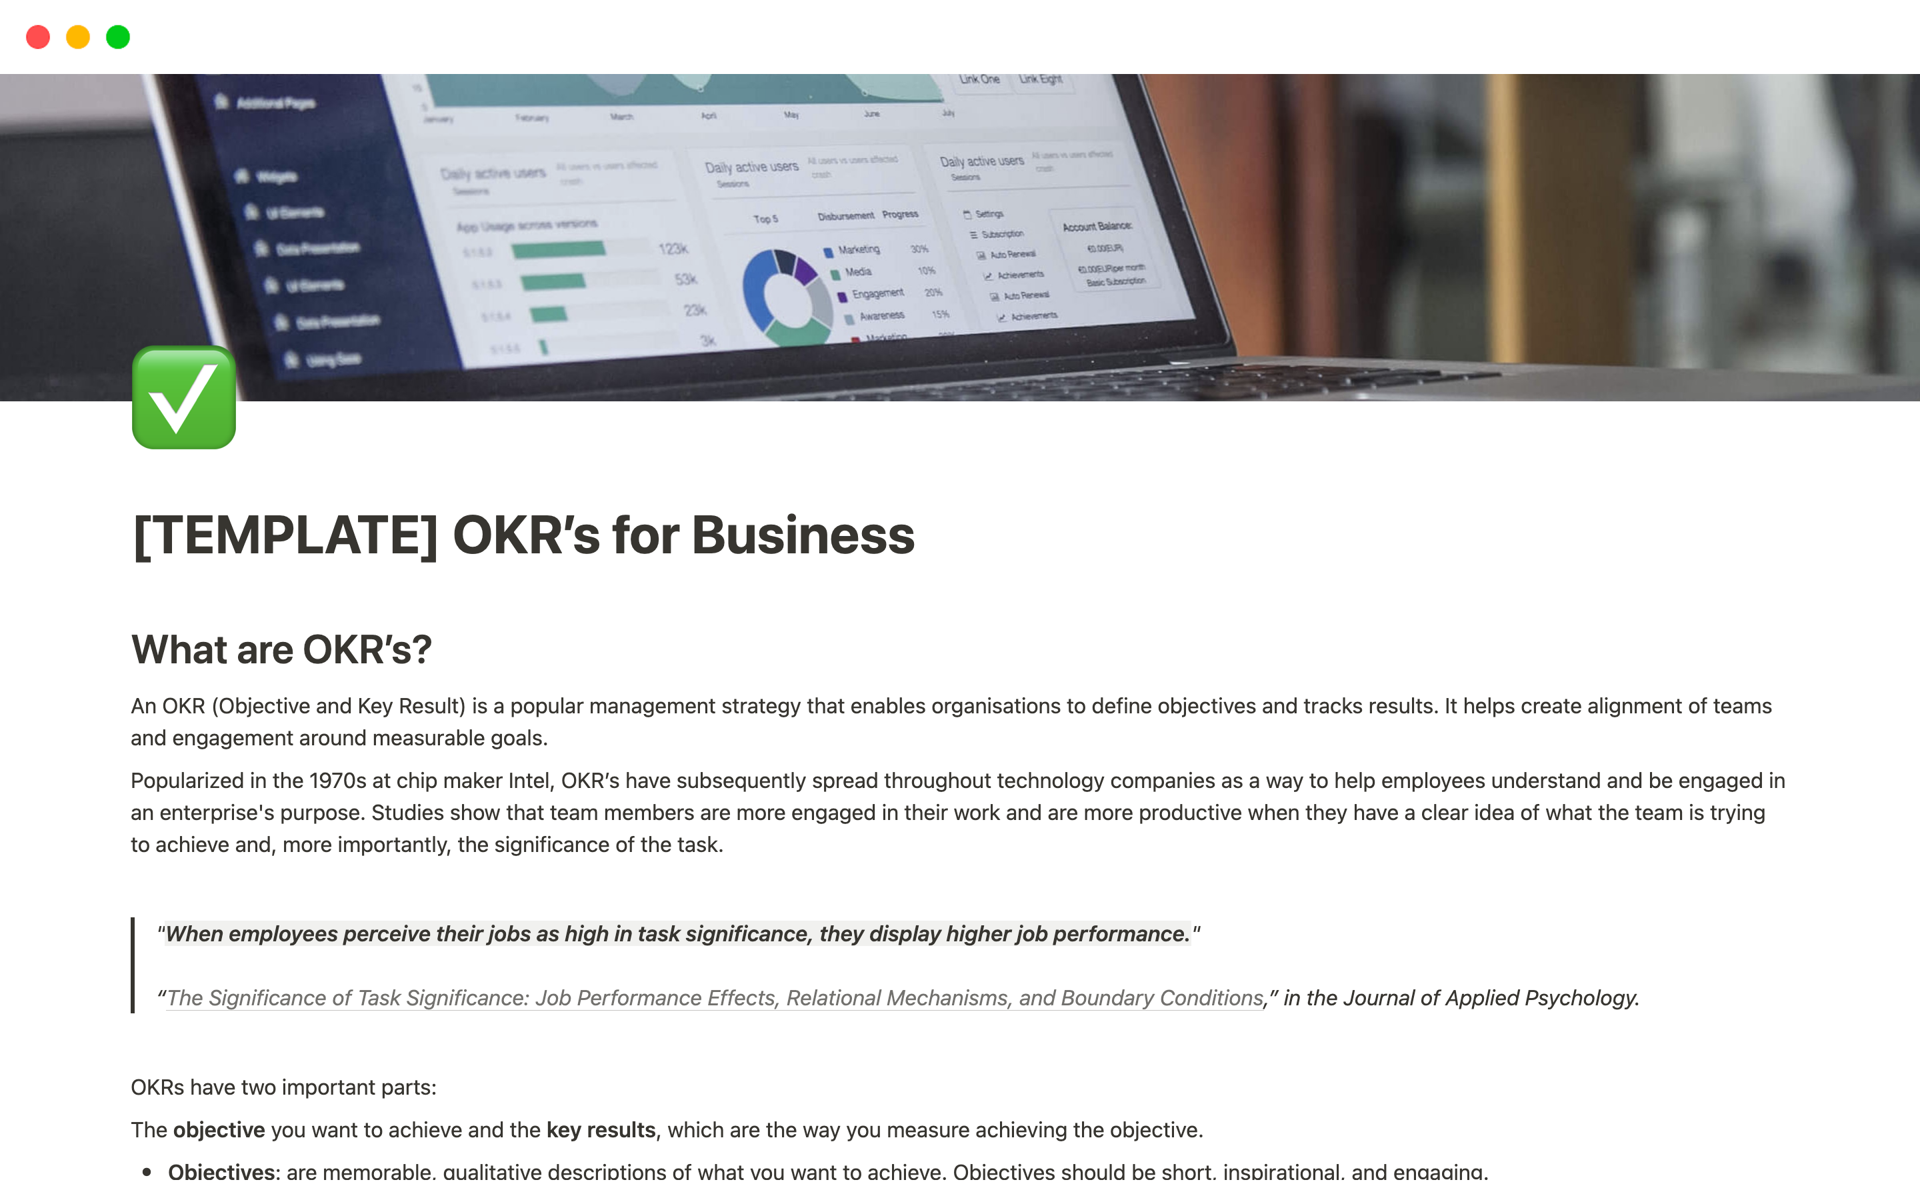 Vista previa de una plantilla para OKR’s for Business